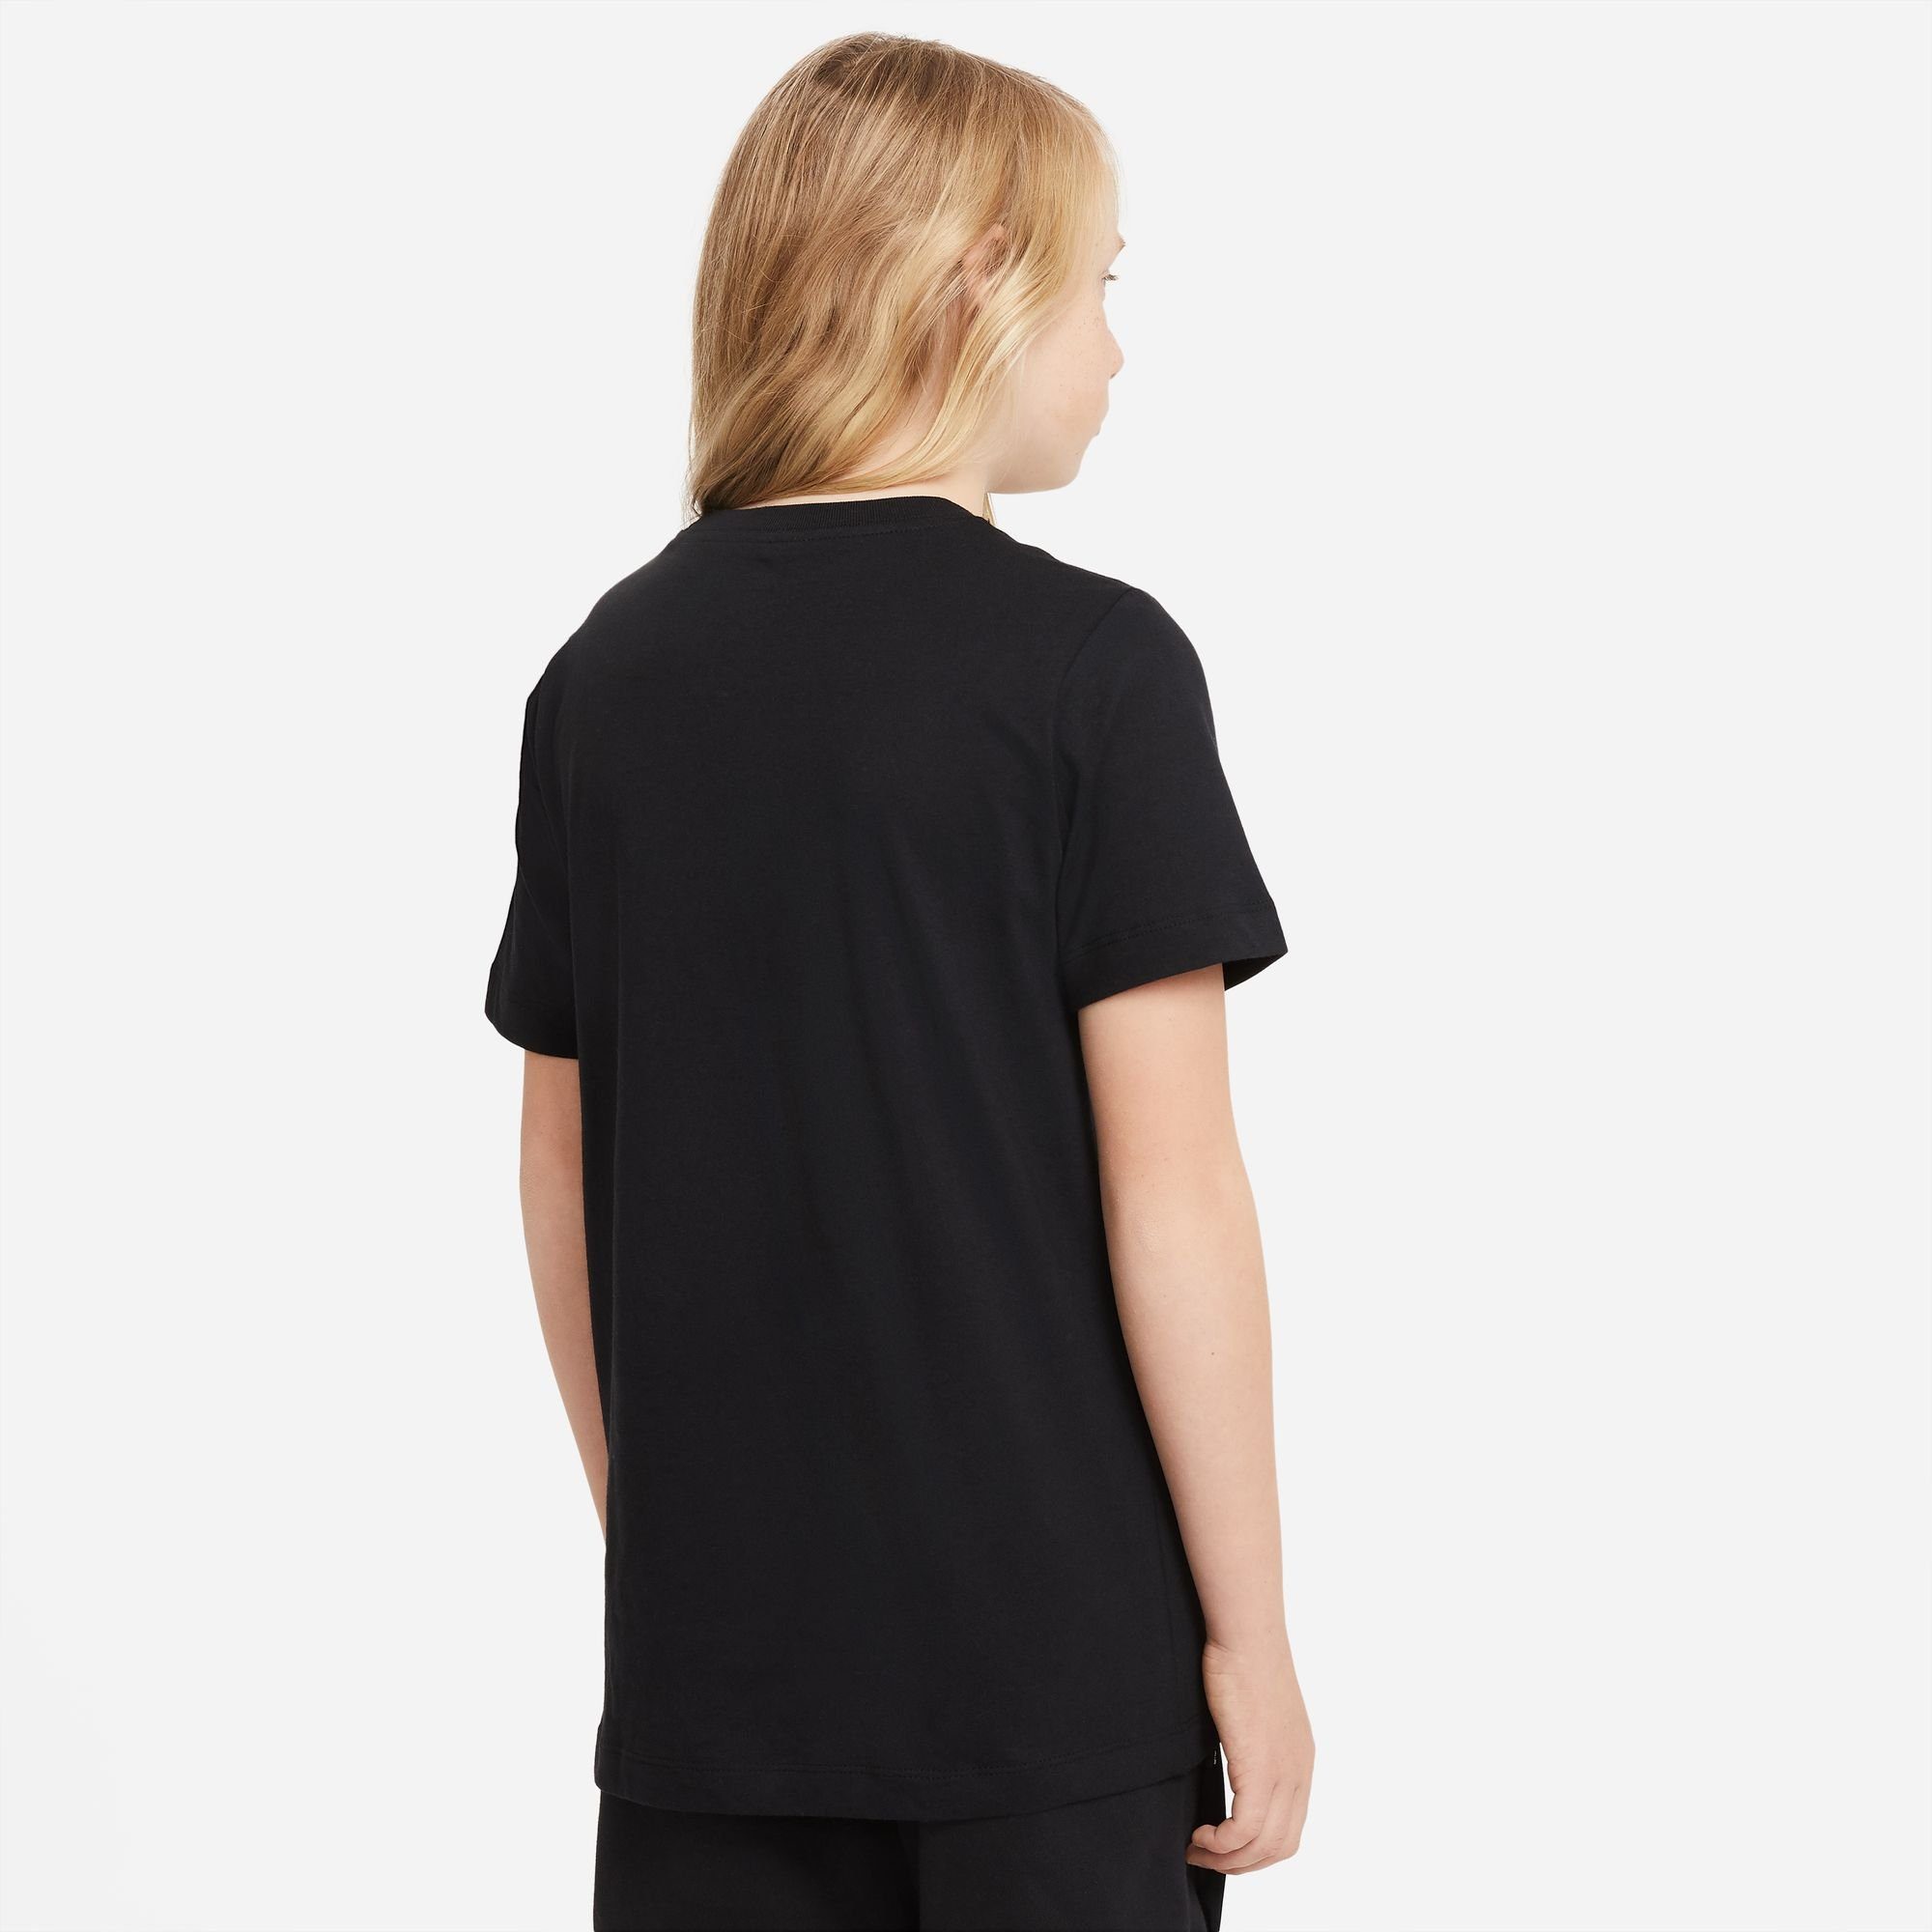 schwarz-grau-weiß T-SHIRT KIDS' BIG T-Shirt COTTON Nike Sportswear